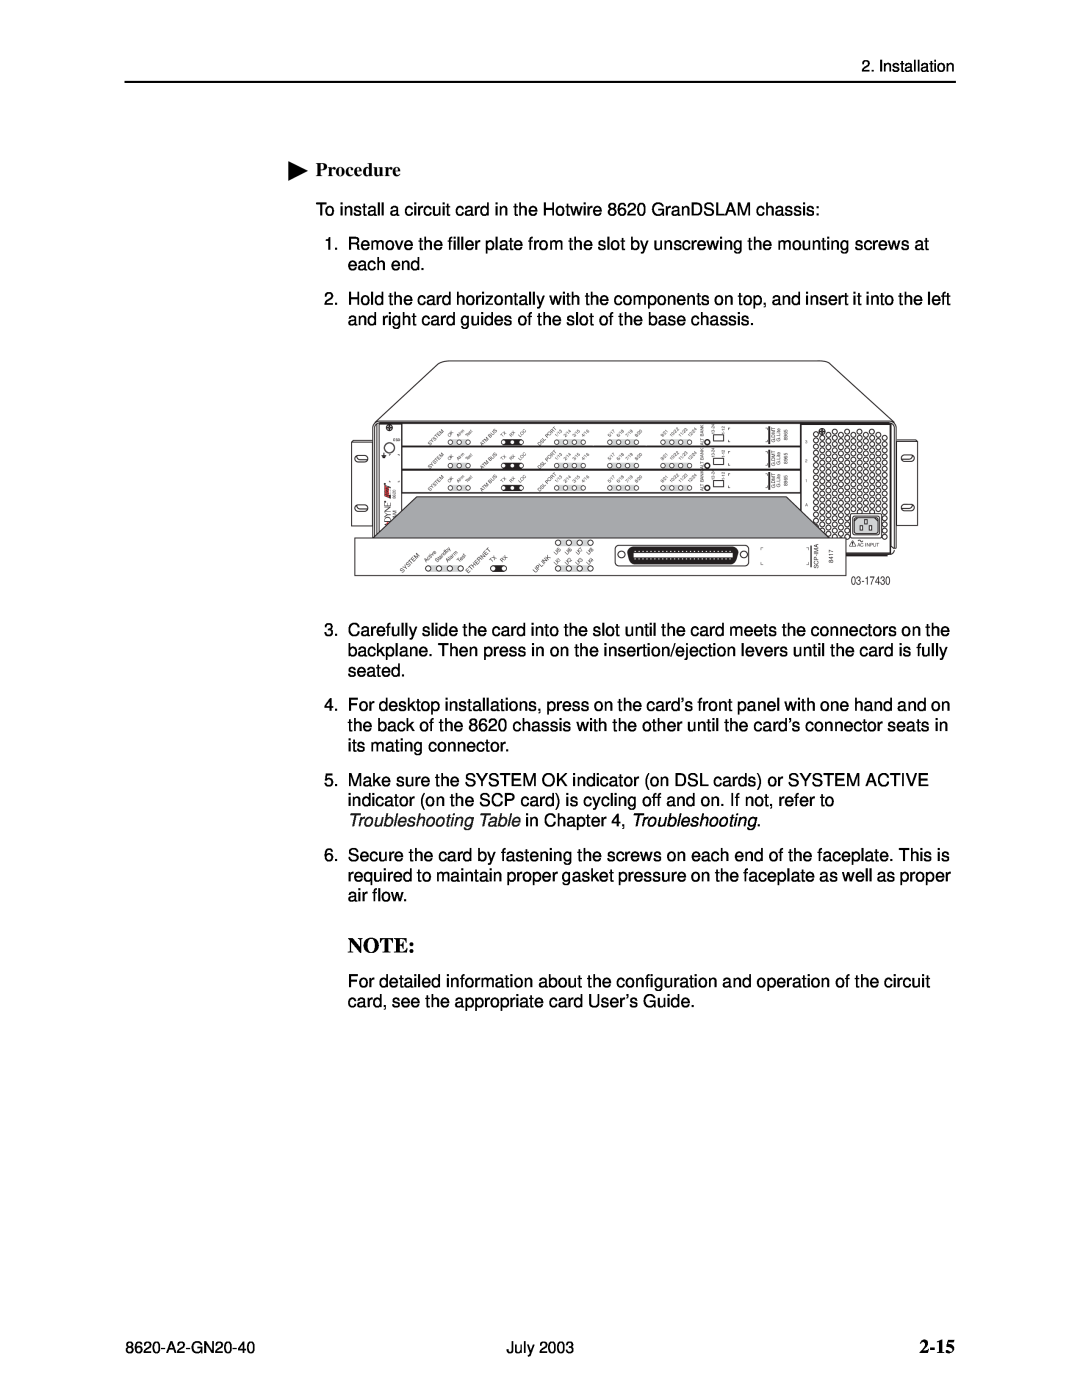 Paradyne Hotwire 8620 GranDSLAM Installation Guide manual 2-15, Procedure 